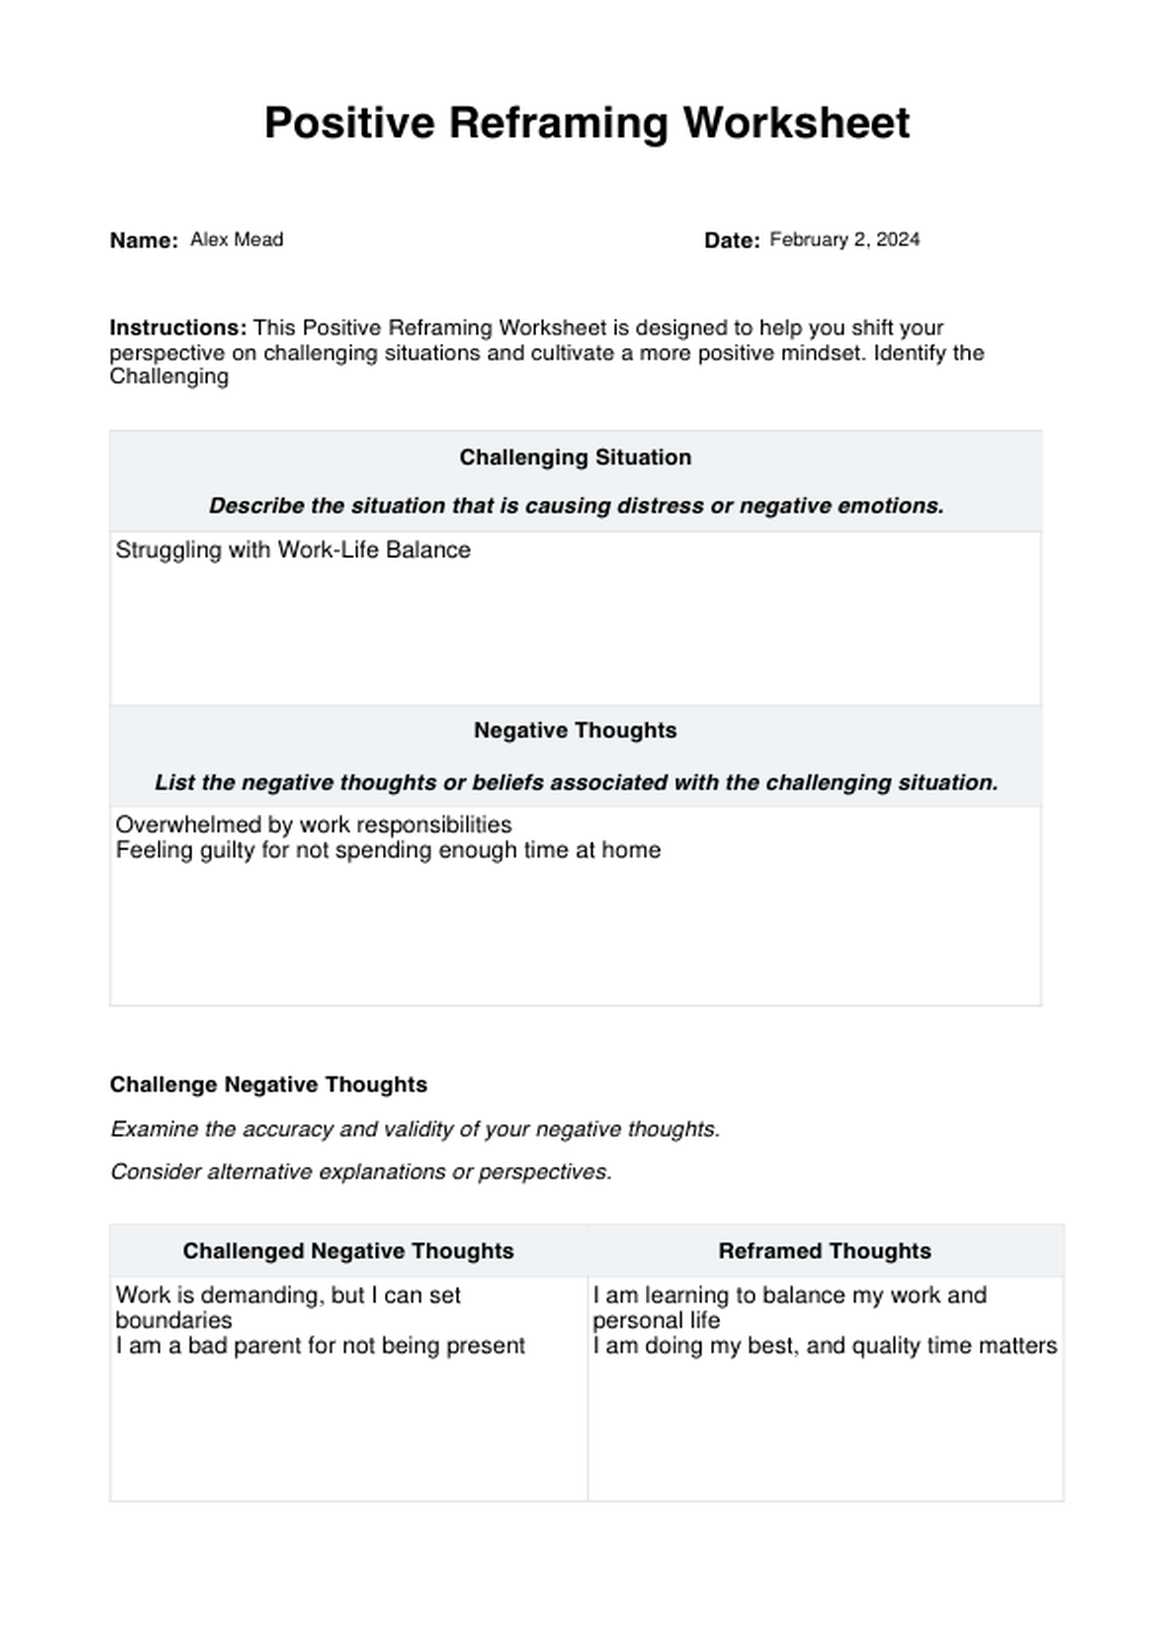 Positive Reframing Worksheet PDF Example